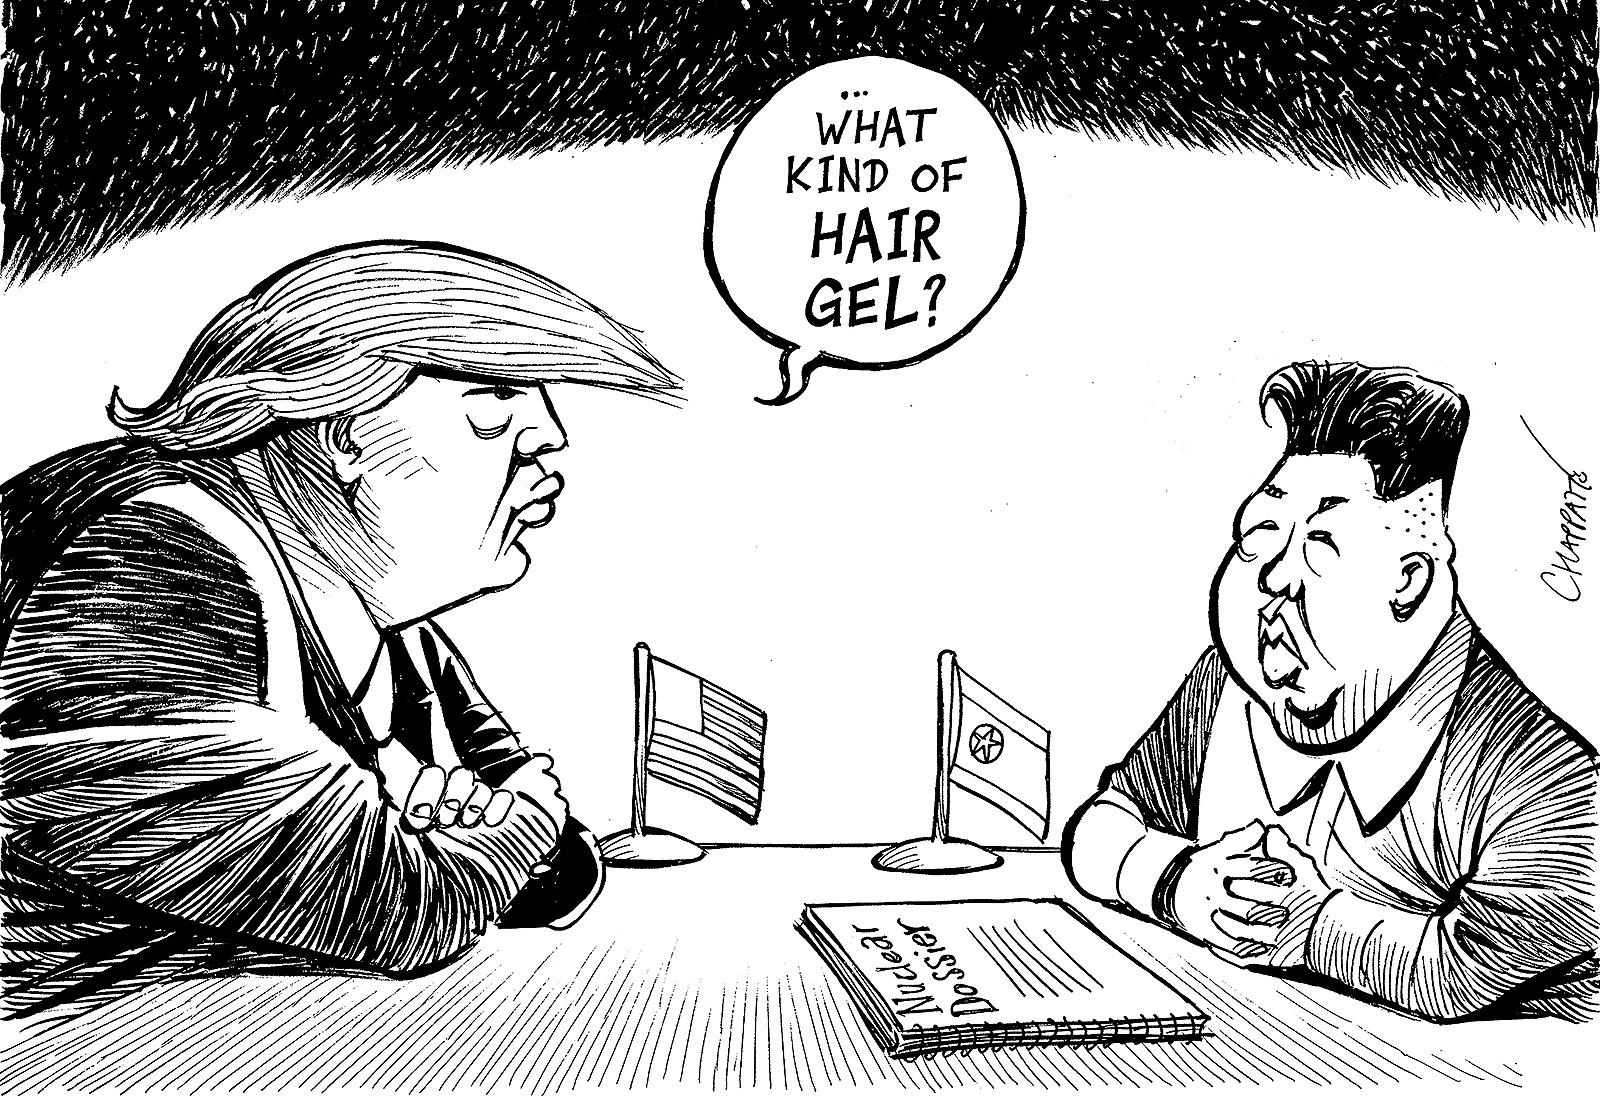 A Trump-Kim meeting?